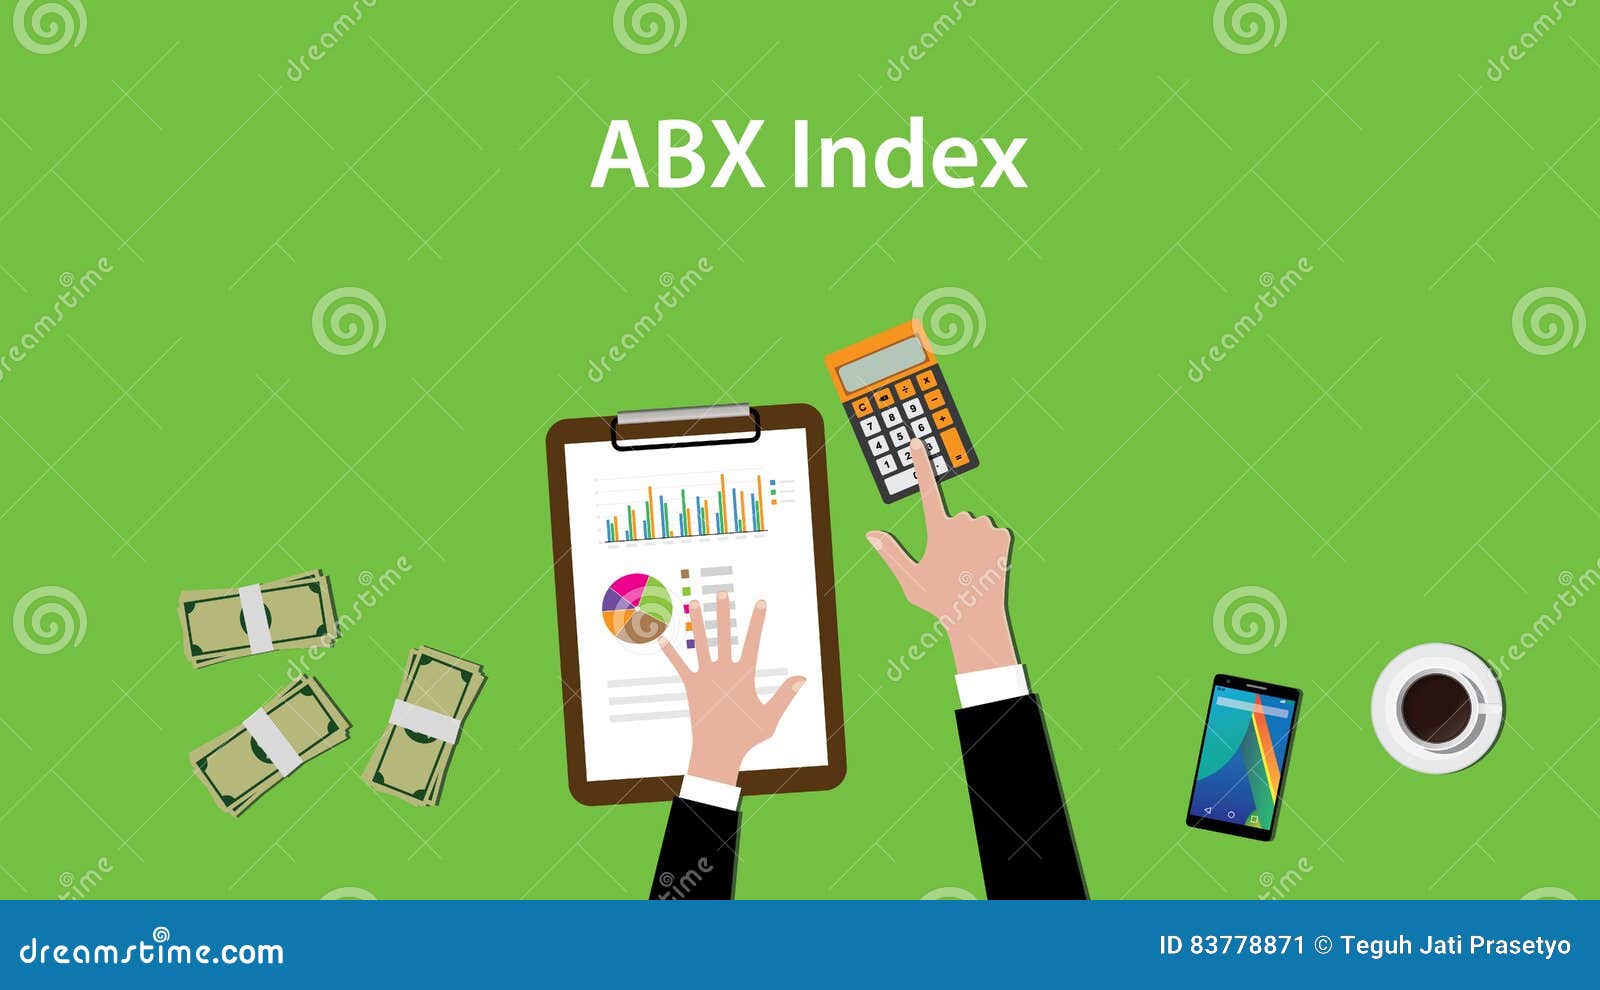 Abx Stock Chart